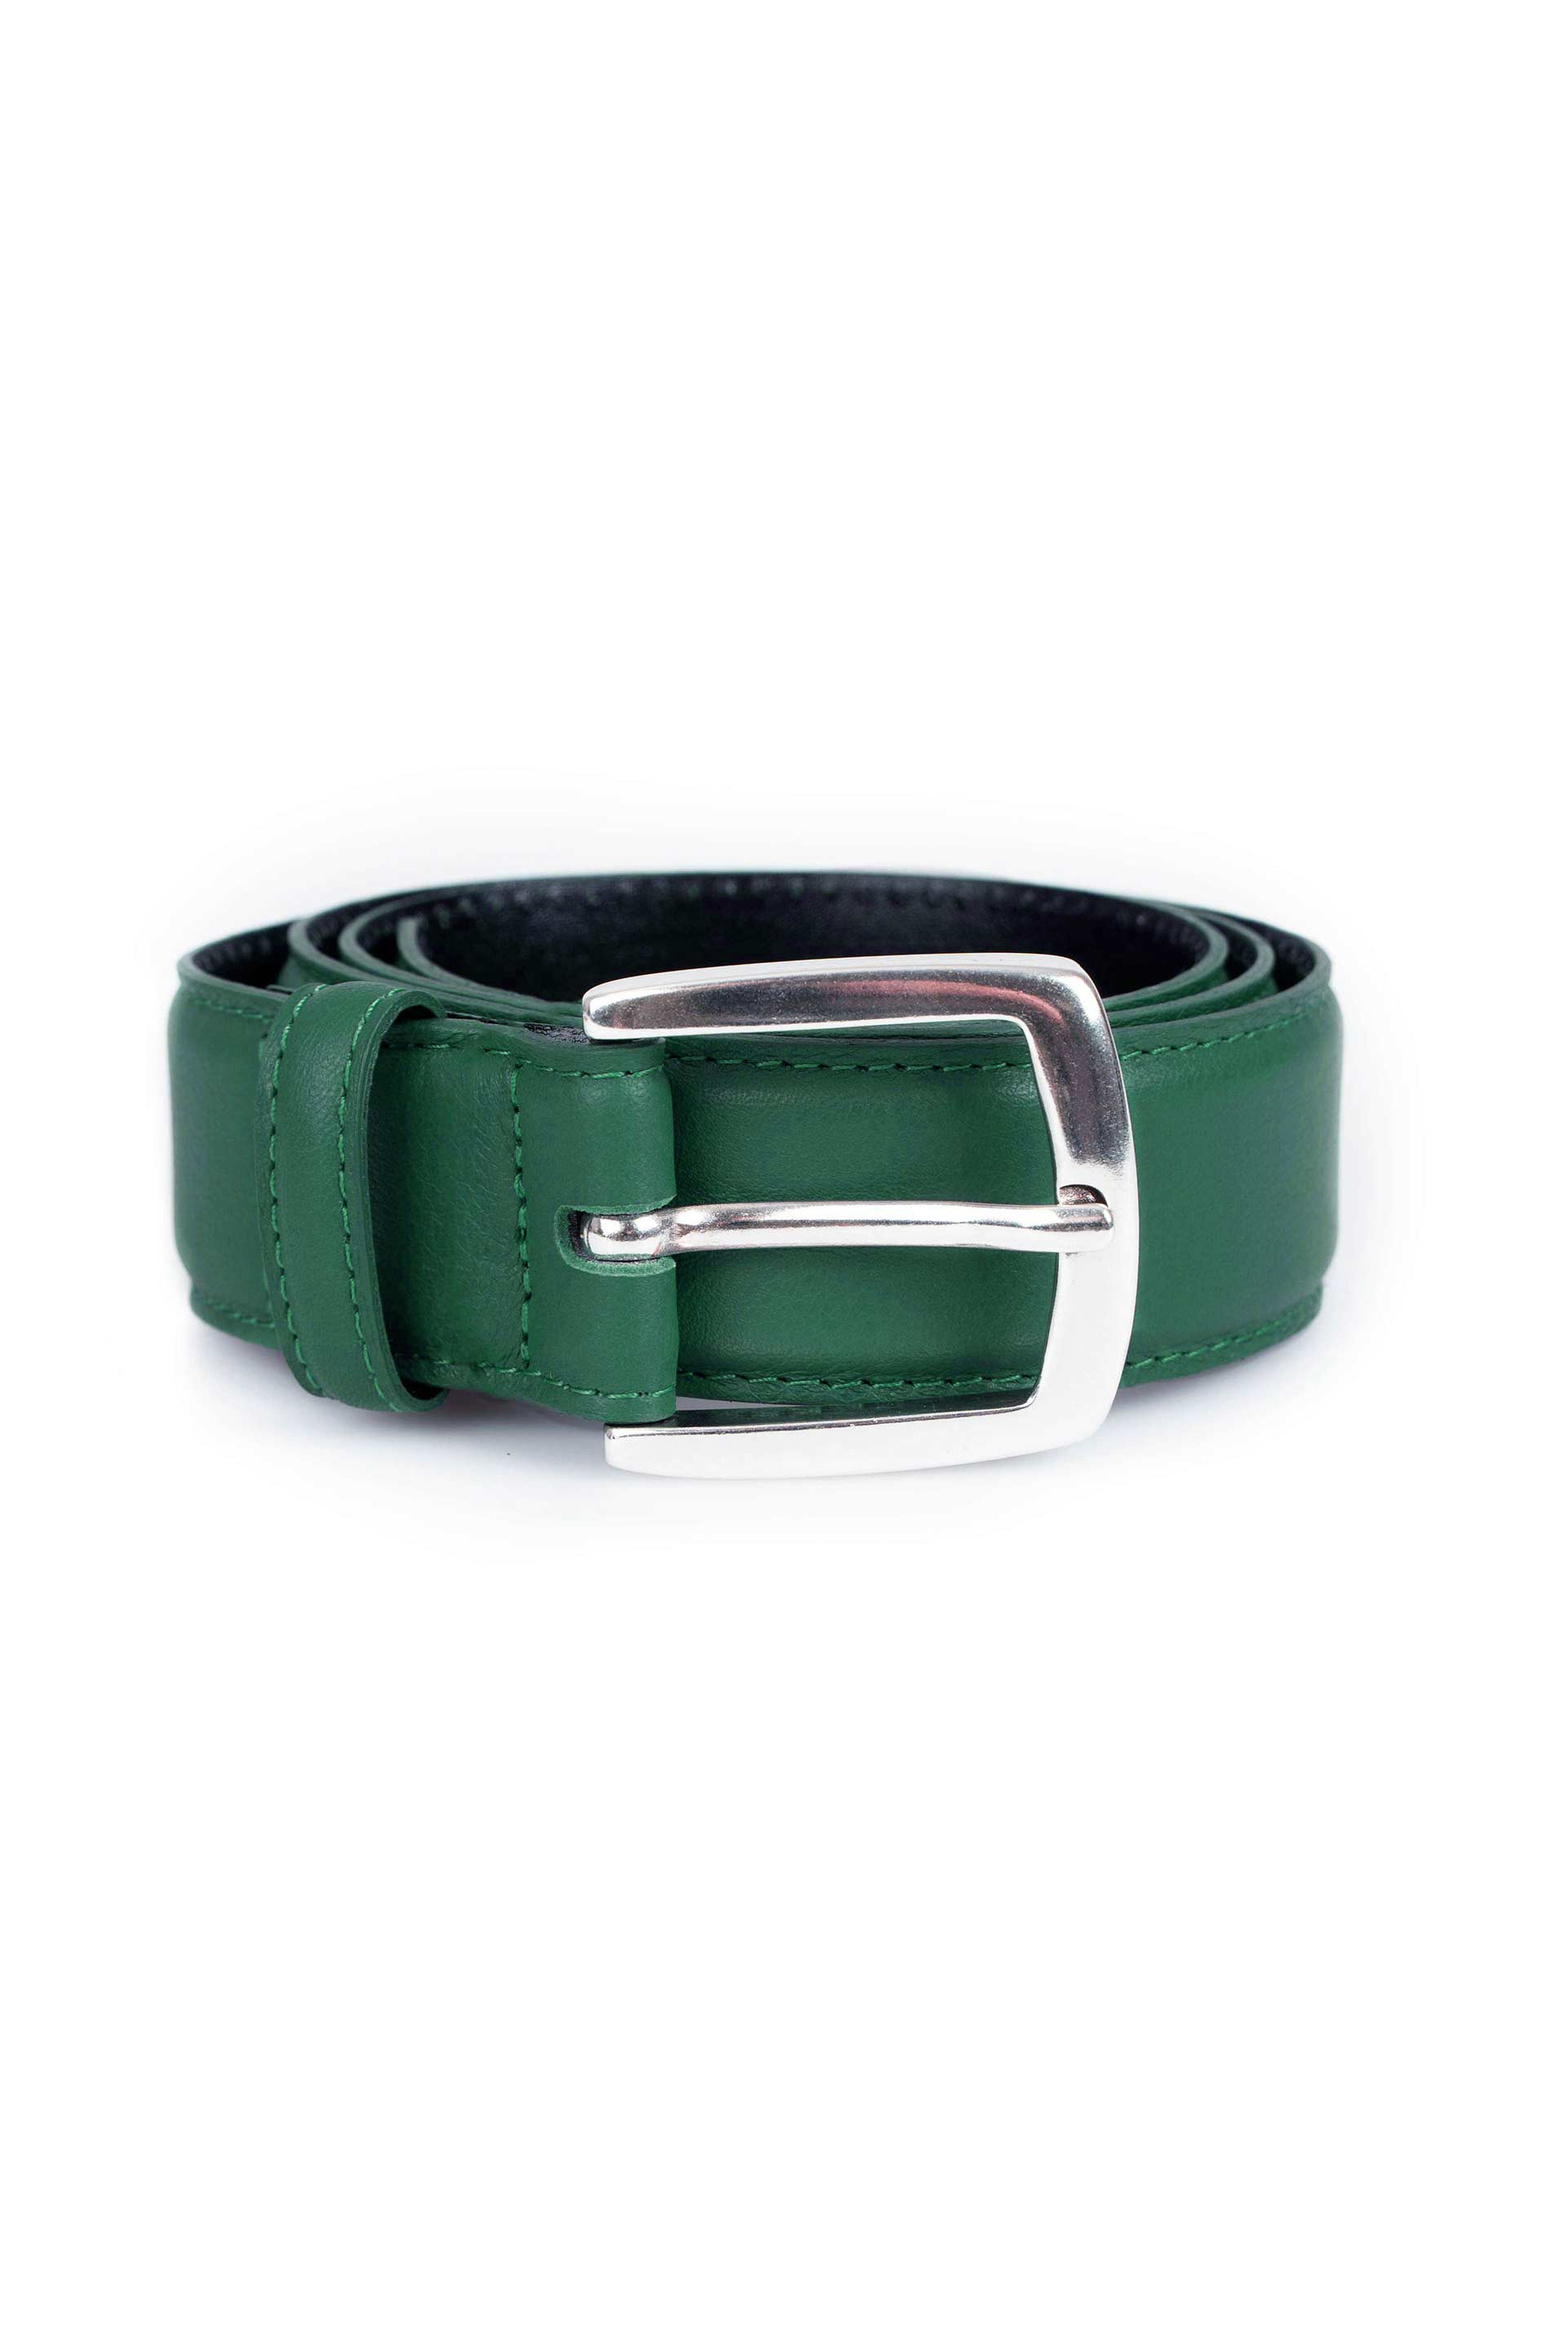 be150_classic-leather-belt_dark_emerald_b.jpg